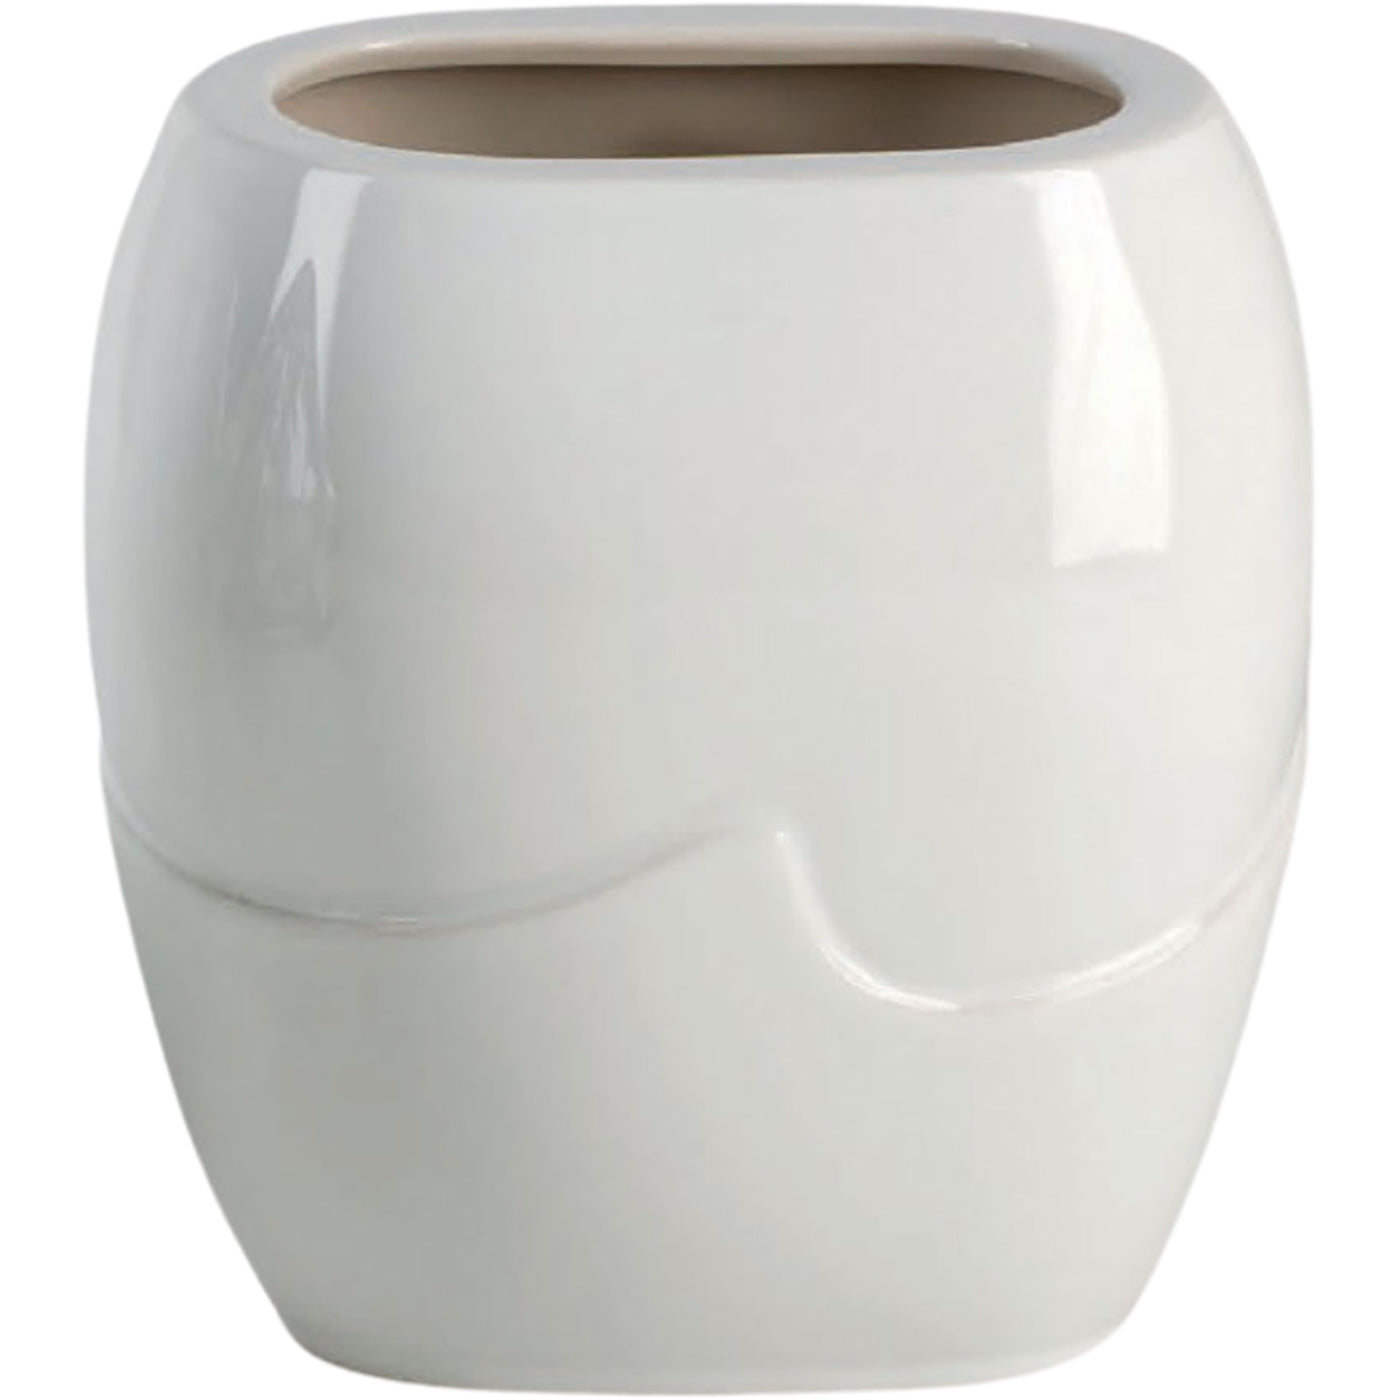 Rectangular grave vase Onda 19x17cm - 7.5x6.7in In white porcelain, ground attached ON166T